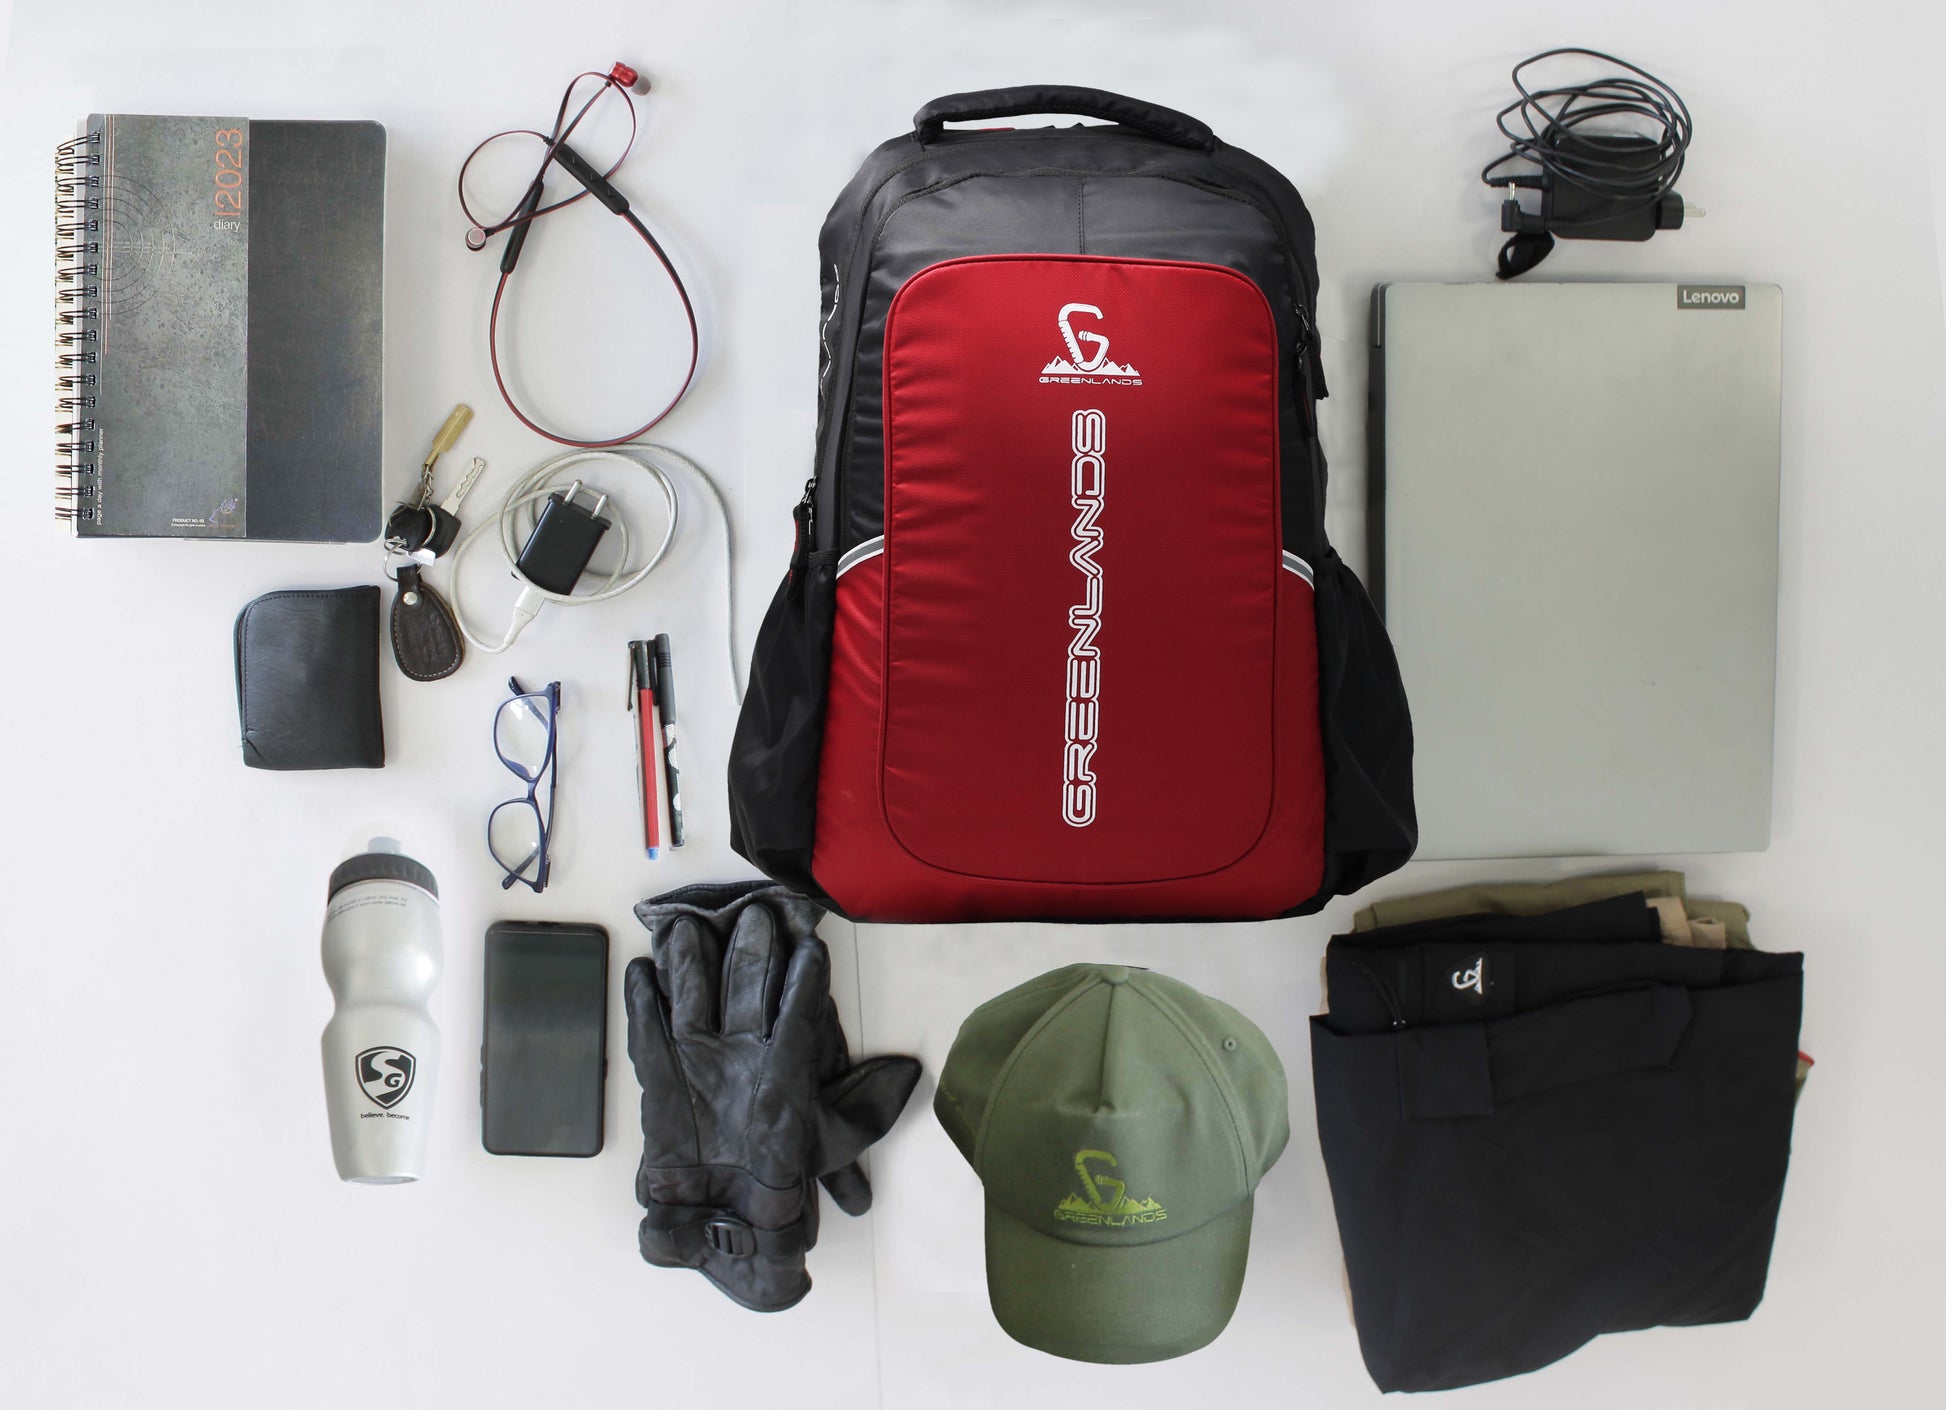 Greenlands Torpedo Backpack - Red